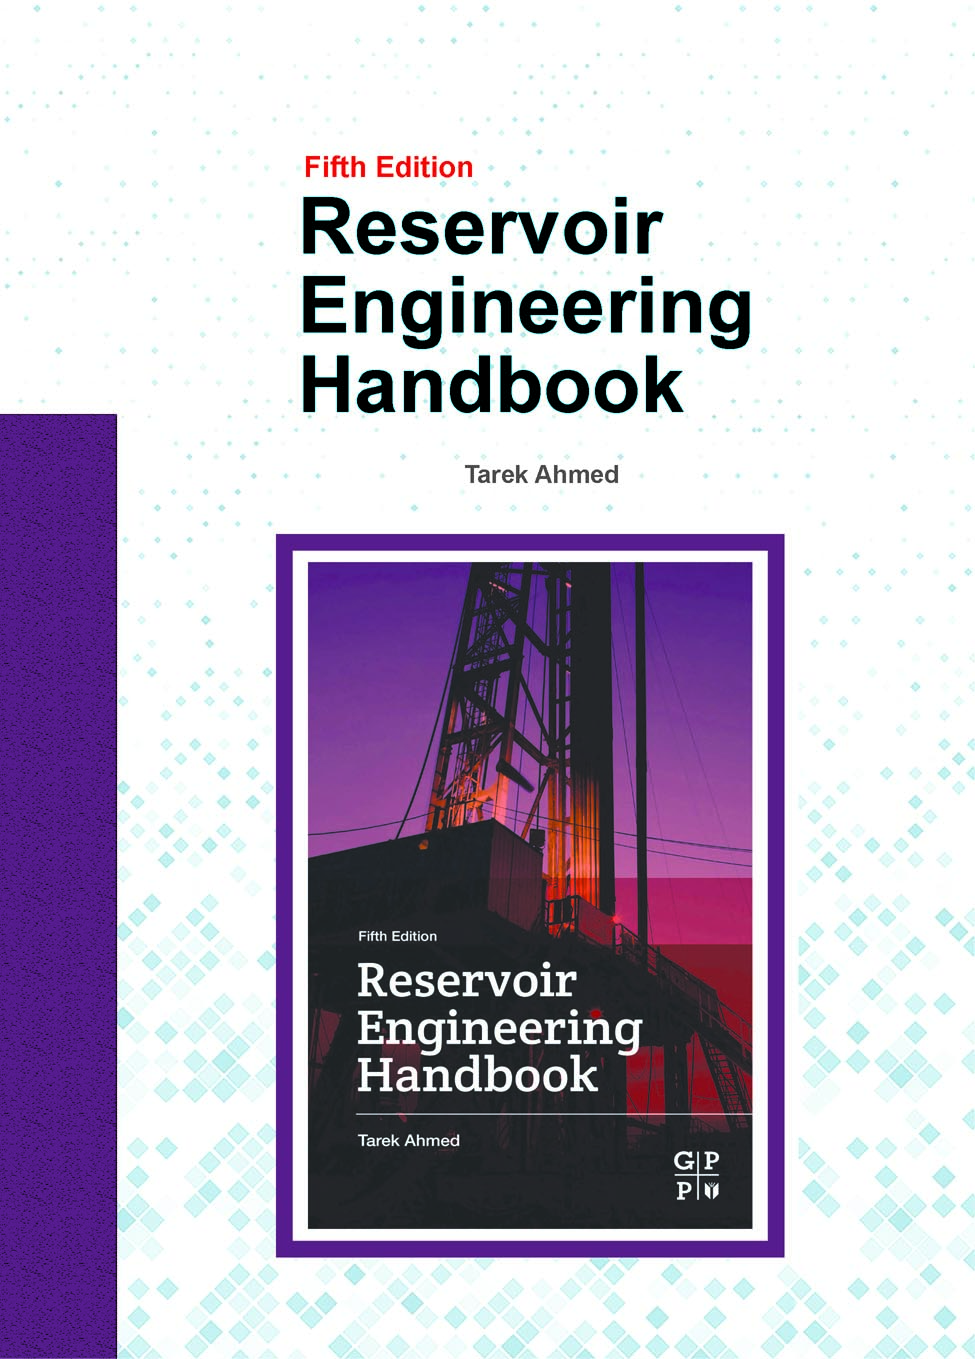 Reservoir Engineering Handbook - Fifth Edition